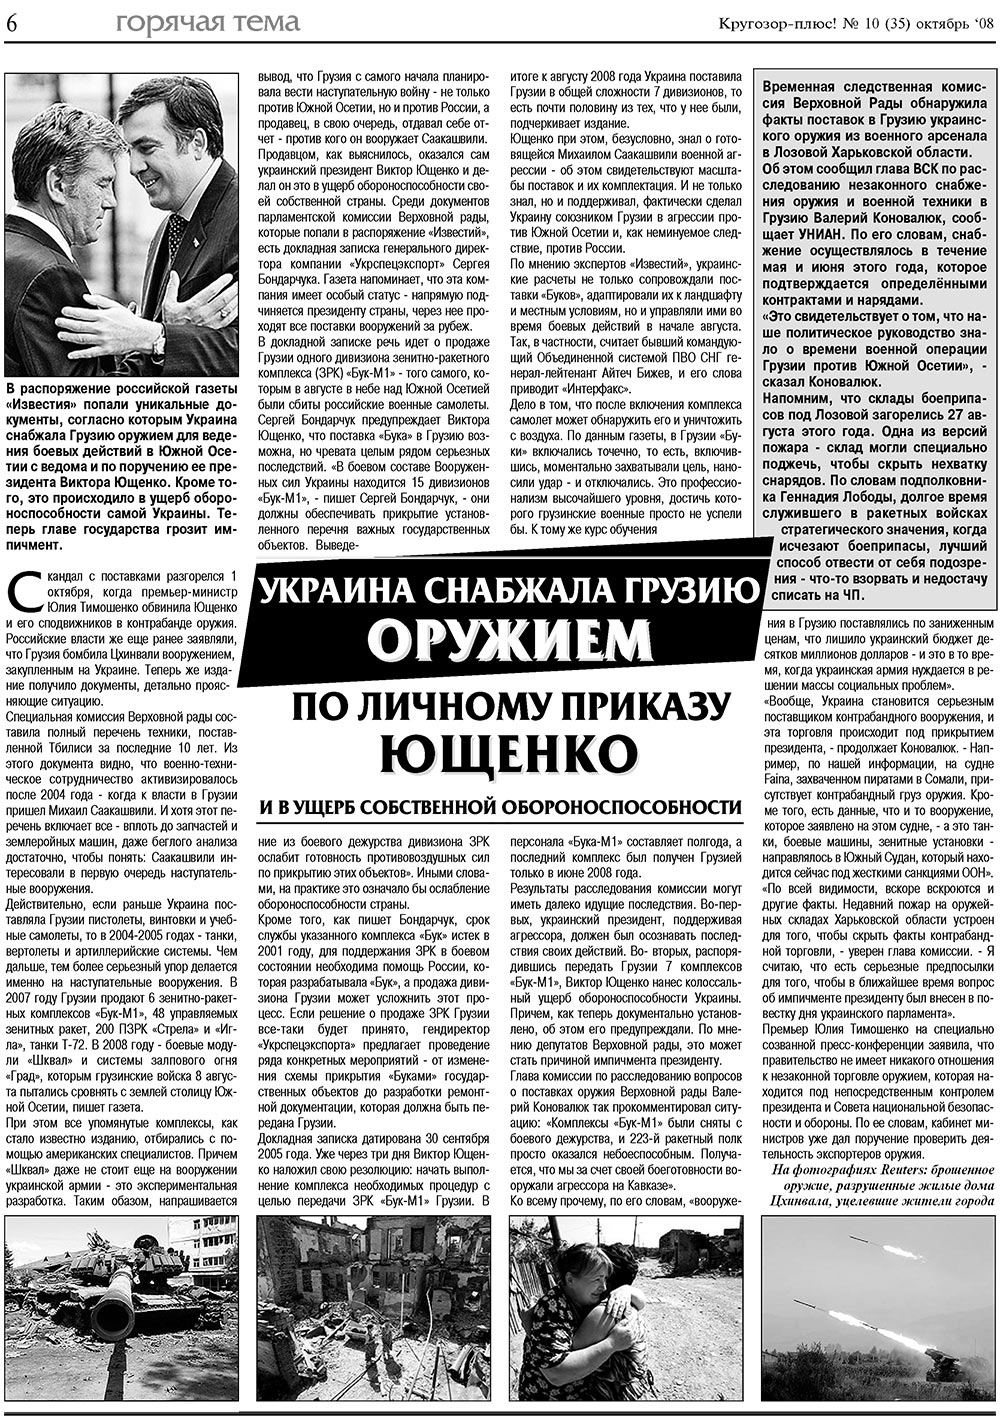 Кругозор плюс! (газета). 2008 год, номер 10, стр. 6